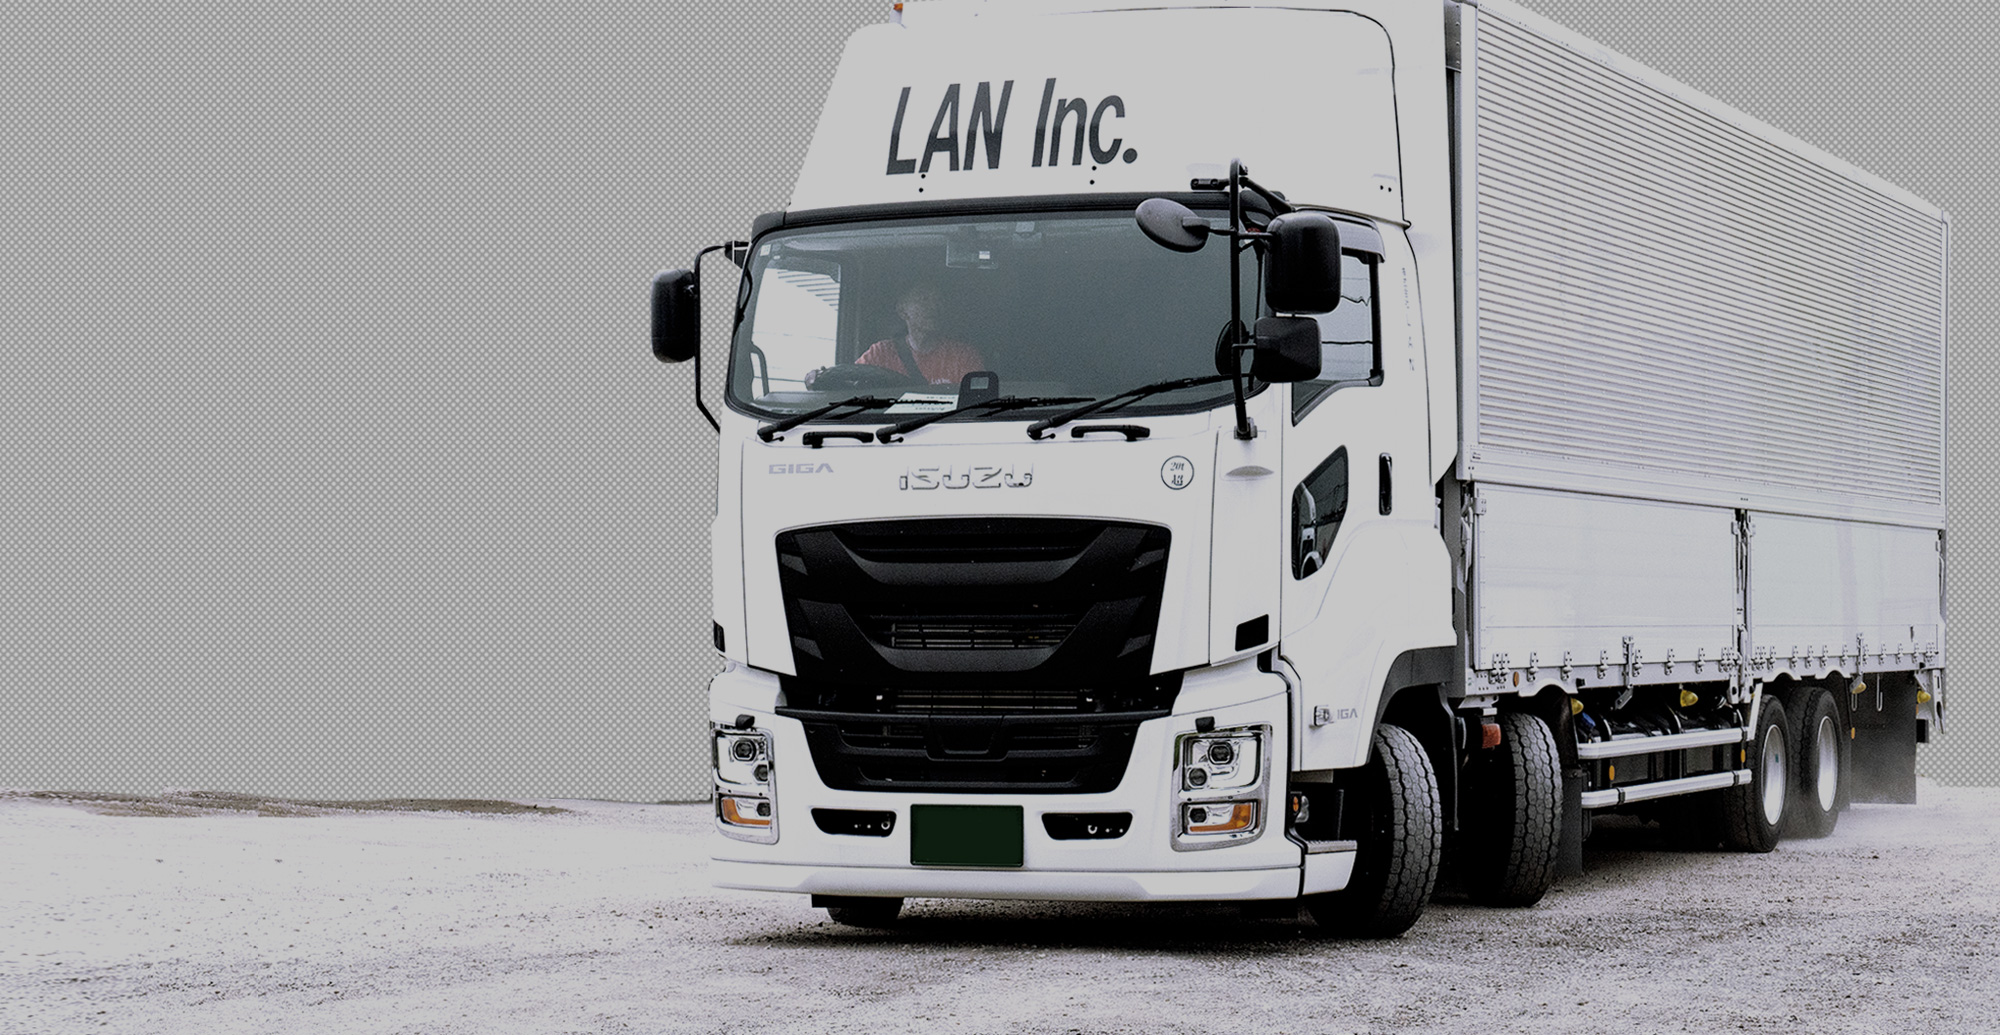 LAN Inc. Local area network  “本気の精神”で突っ走る 熱意とやる気あふれる運送会社  安全・迅速・確実を届ける、運送の一歩先へ